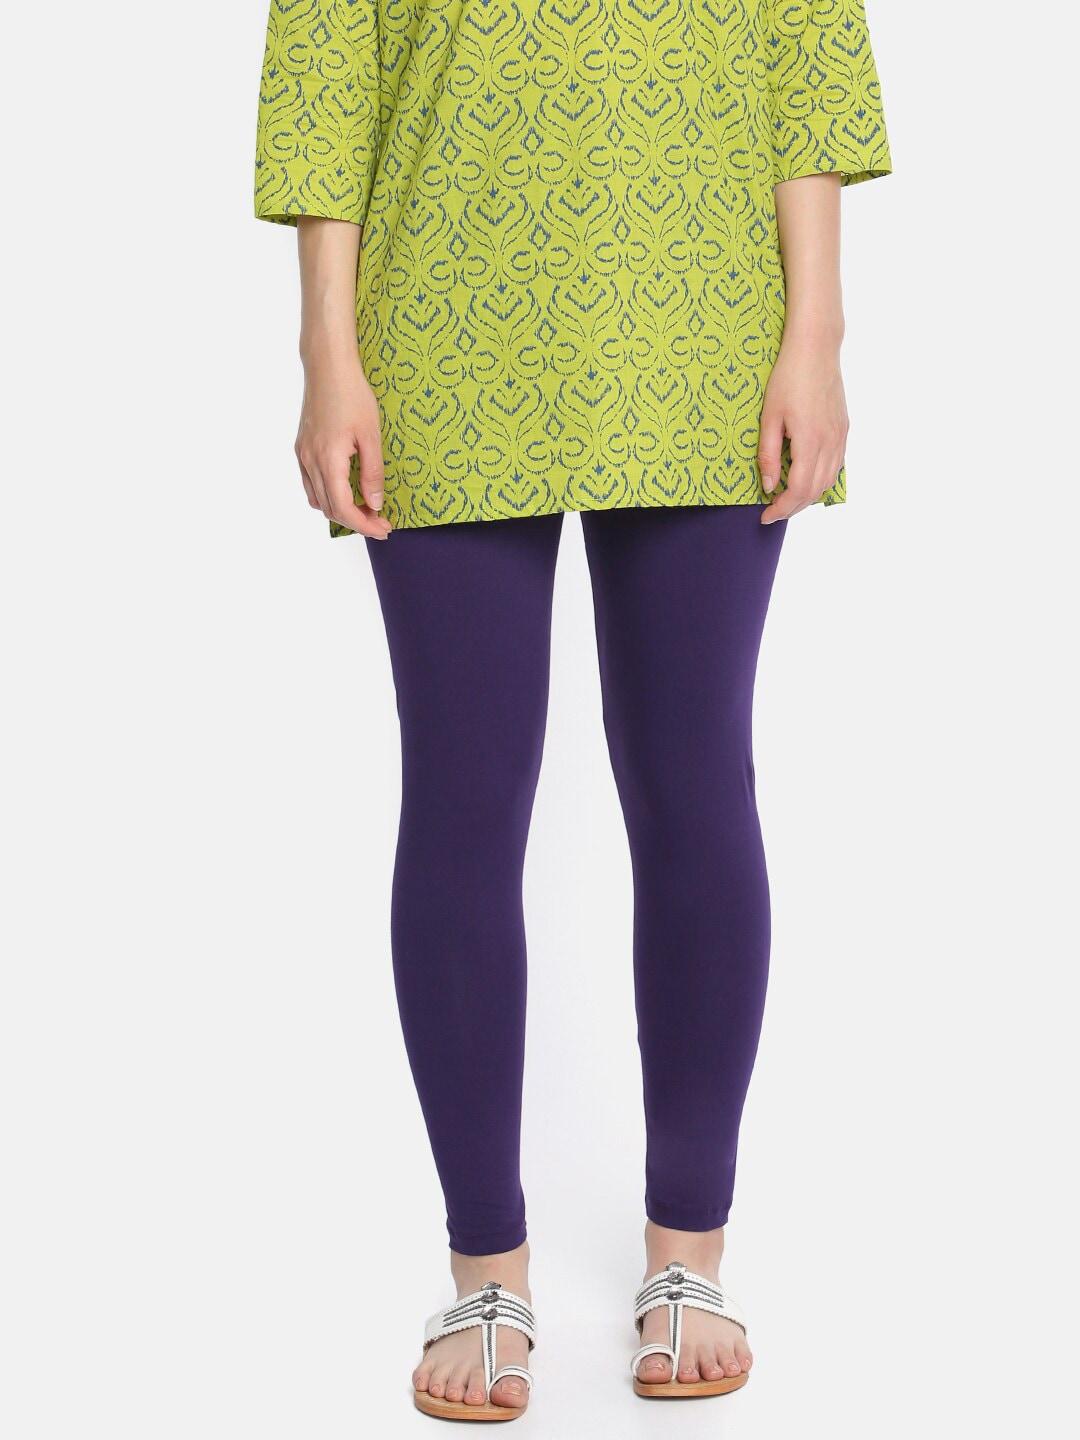 dollar-missy-woman-purple-cotton-slim-fit-ankle-length-leggings